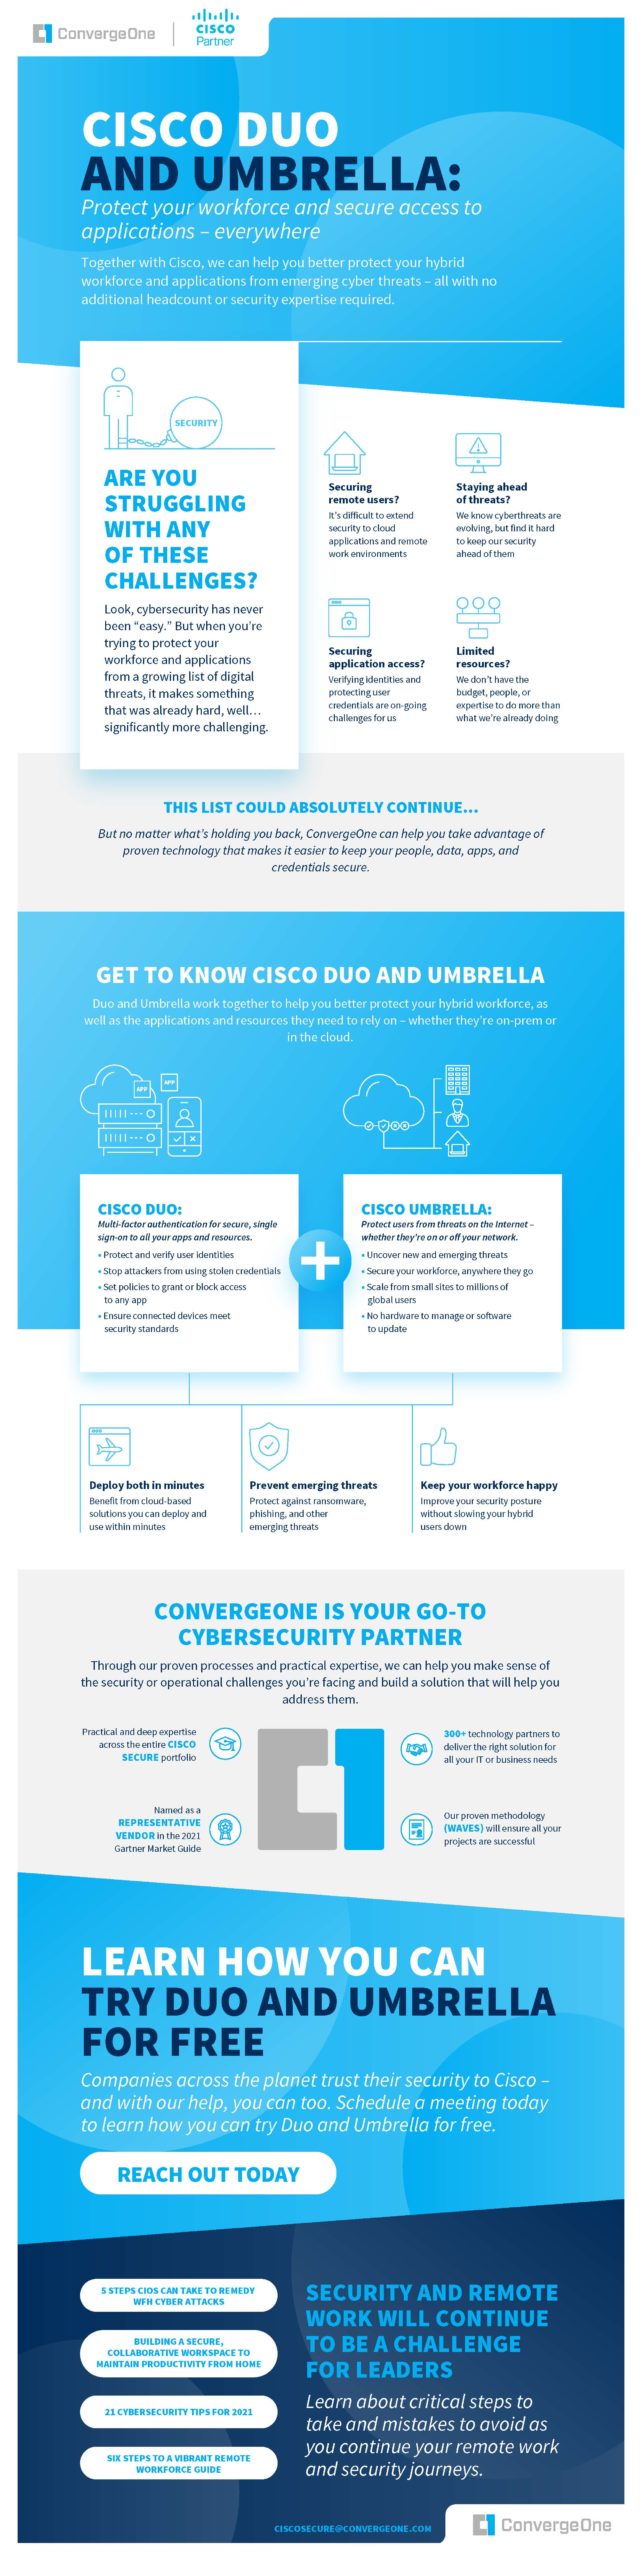 ConvergeOne Cisco Duo and Umbrella Infographic